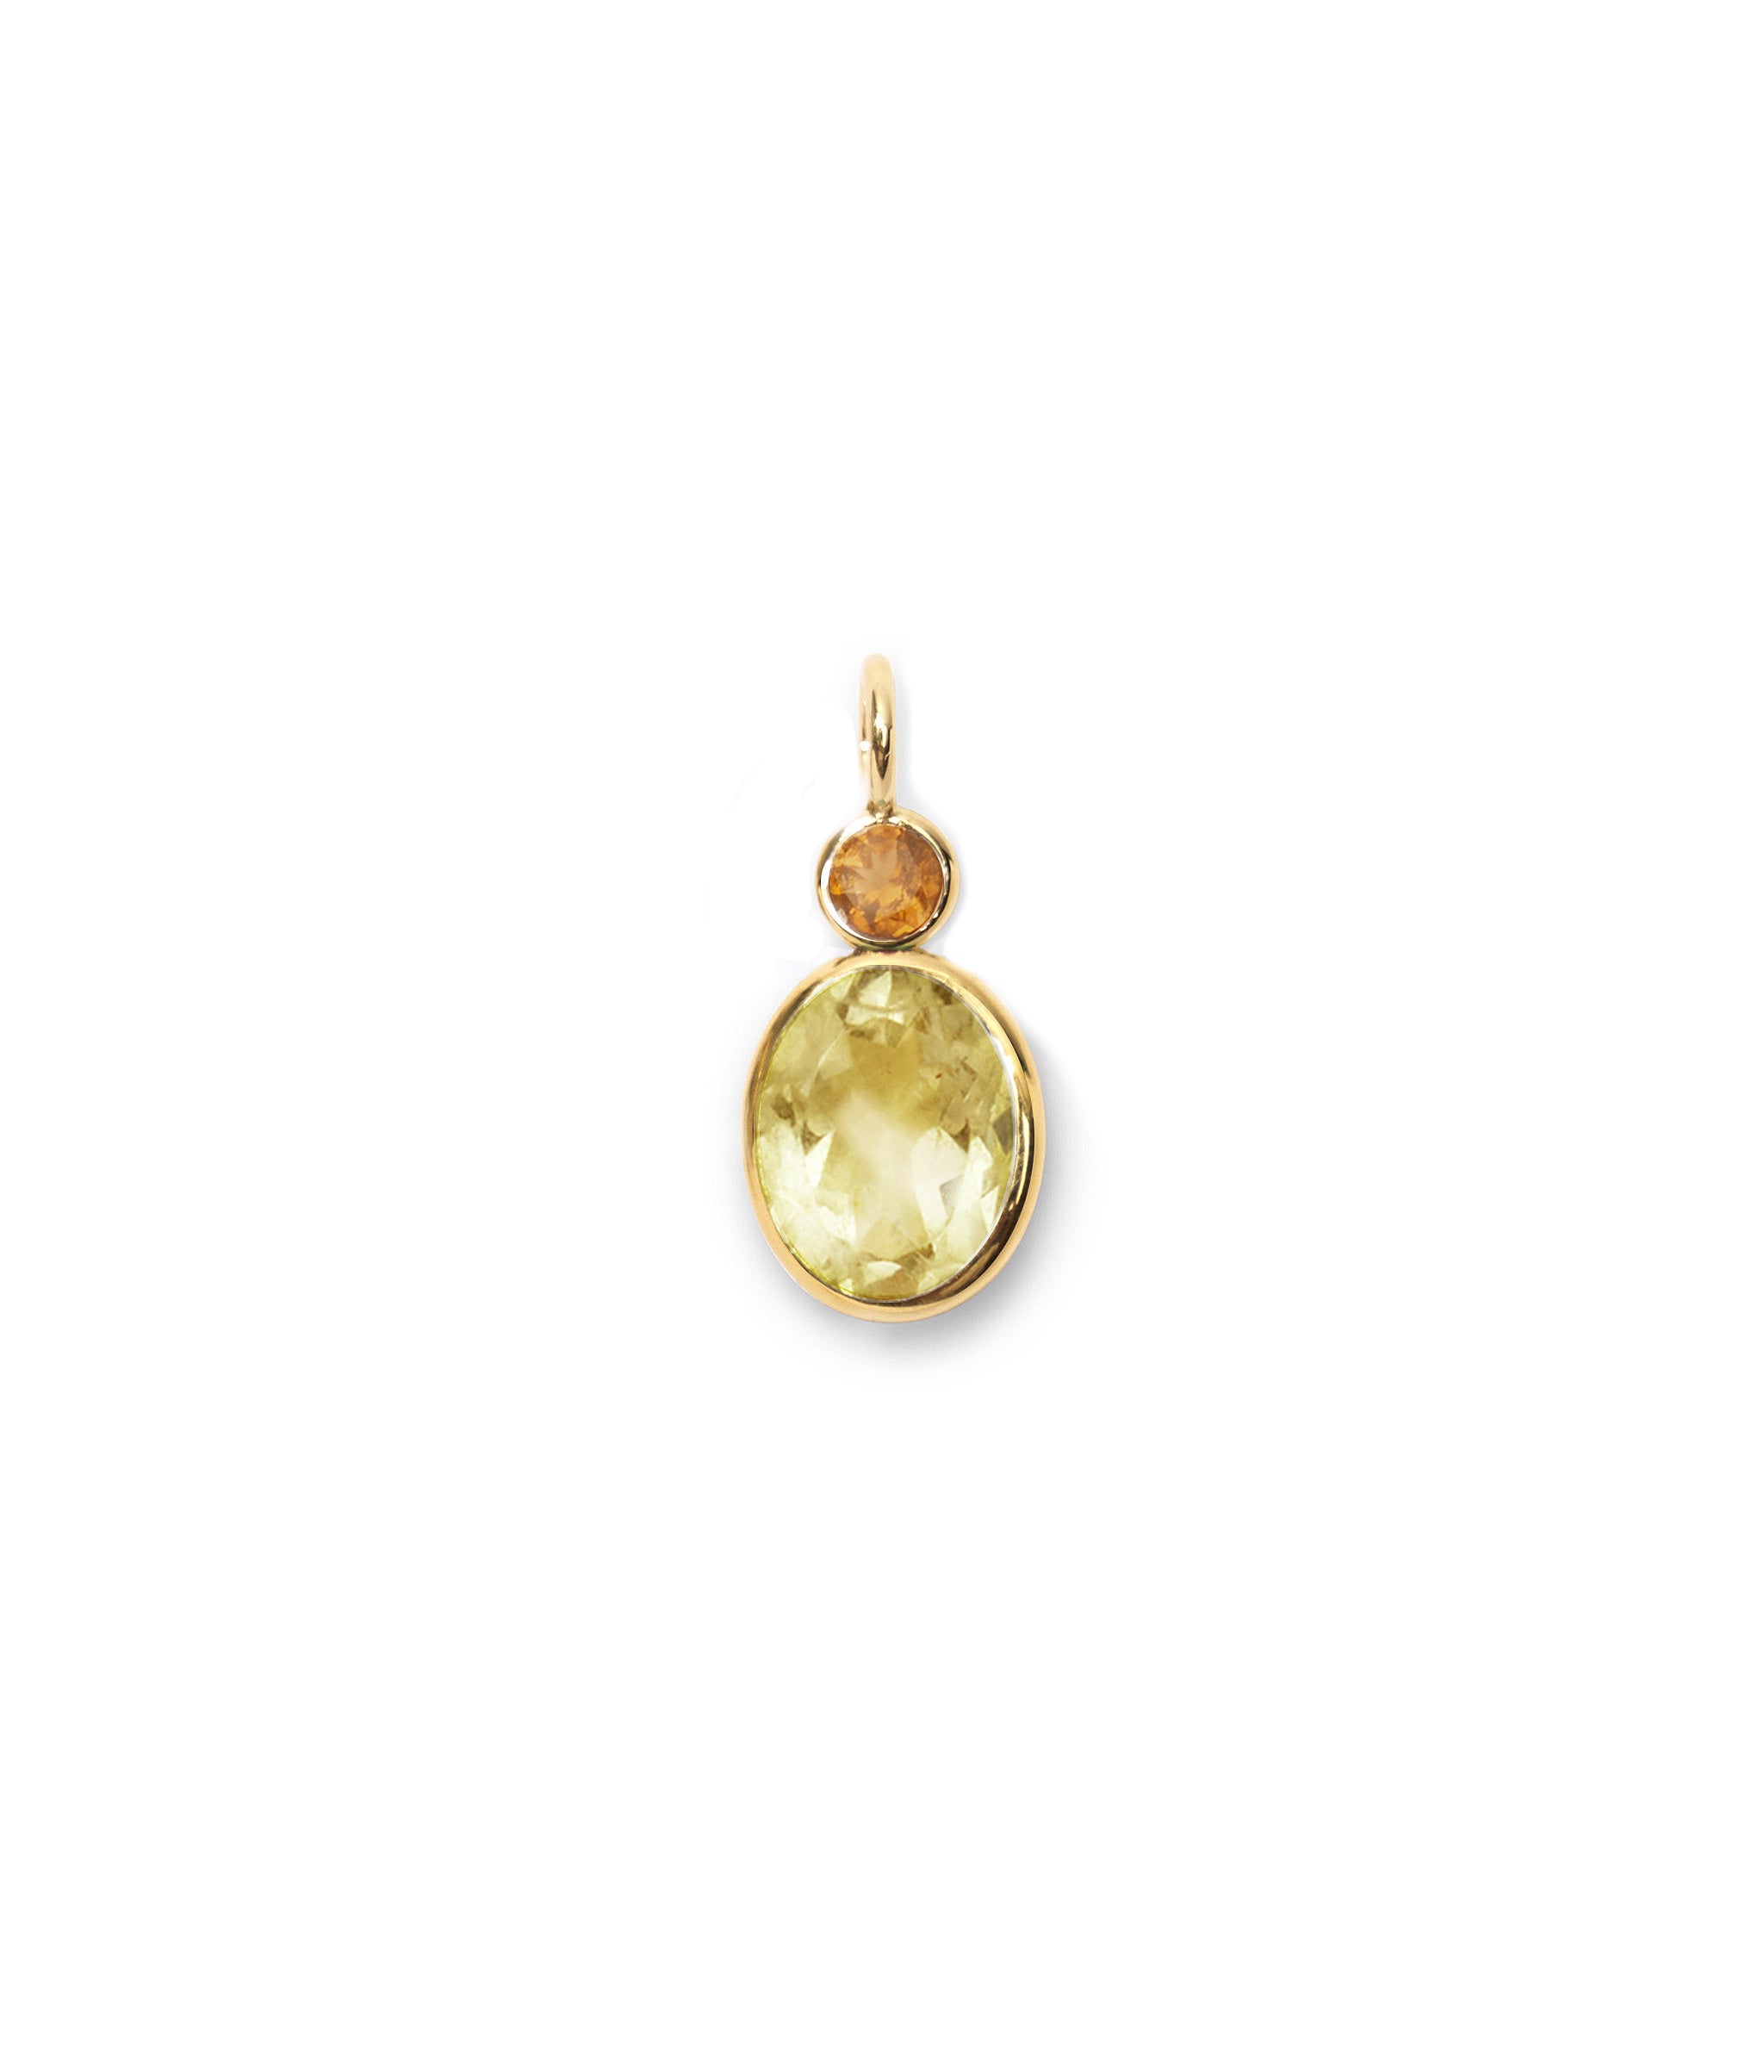 Oval 14k Gold Necklace Charm in Citrine & Lemon Quartz